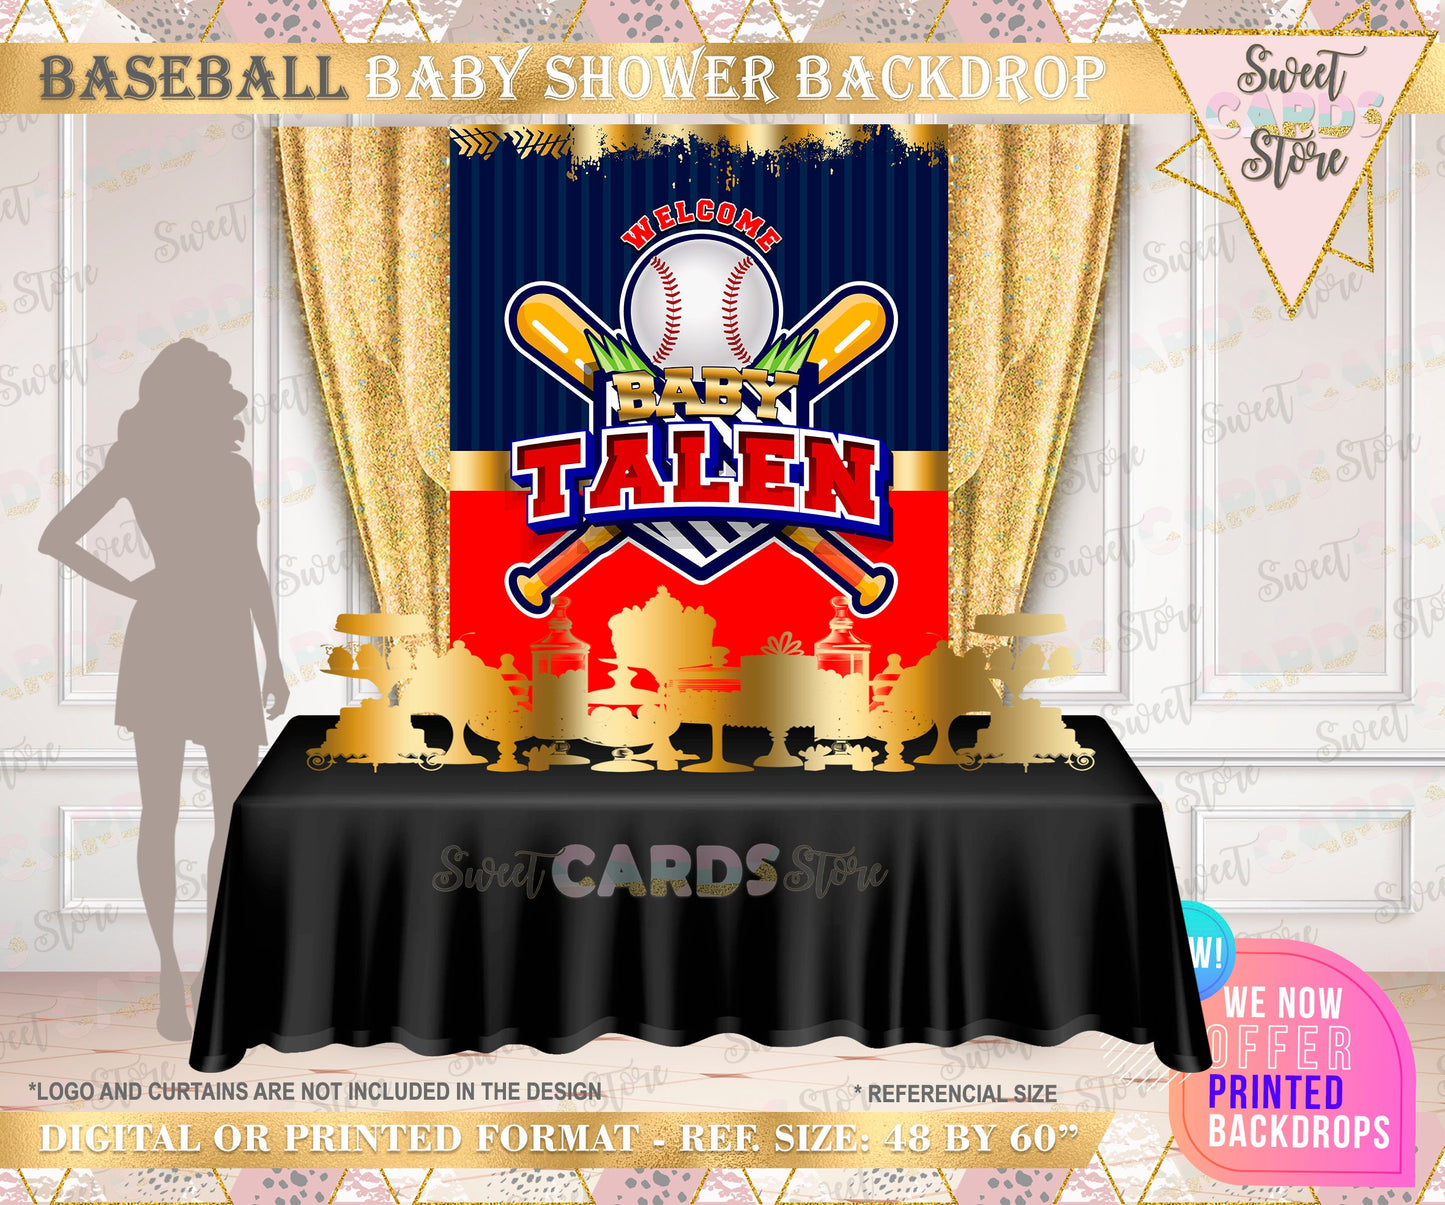 Sports baseball party backdrop decor, baseball party decor, baseball decor backdrop, sports baseball boy baby shower party backdrop decor